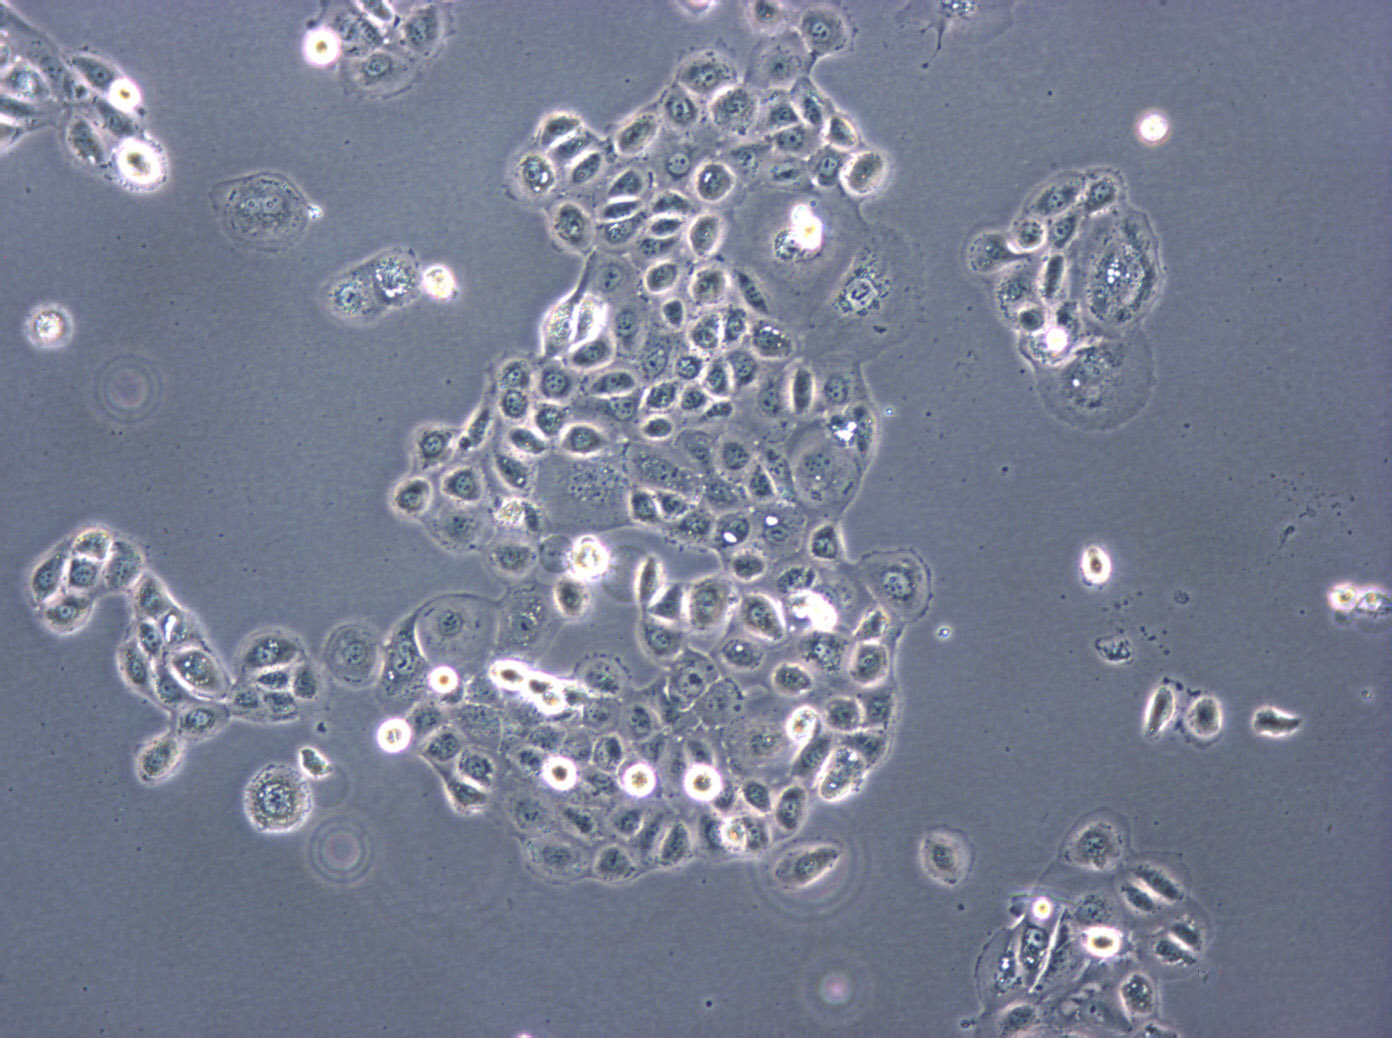 LSC-1 Cell|大鼠肝星形细胞,LSC-1 Cell